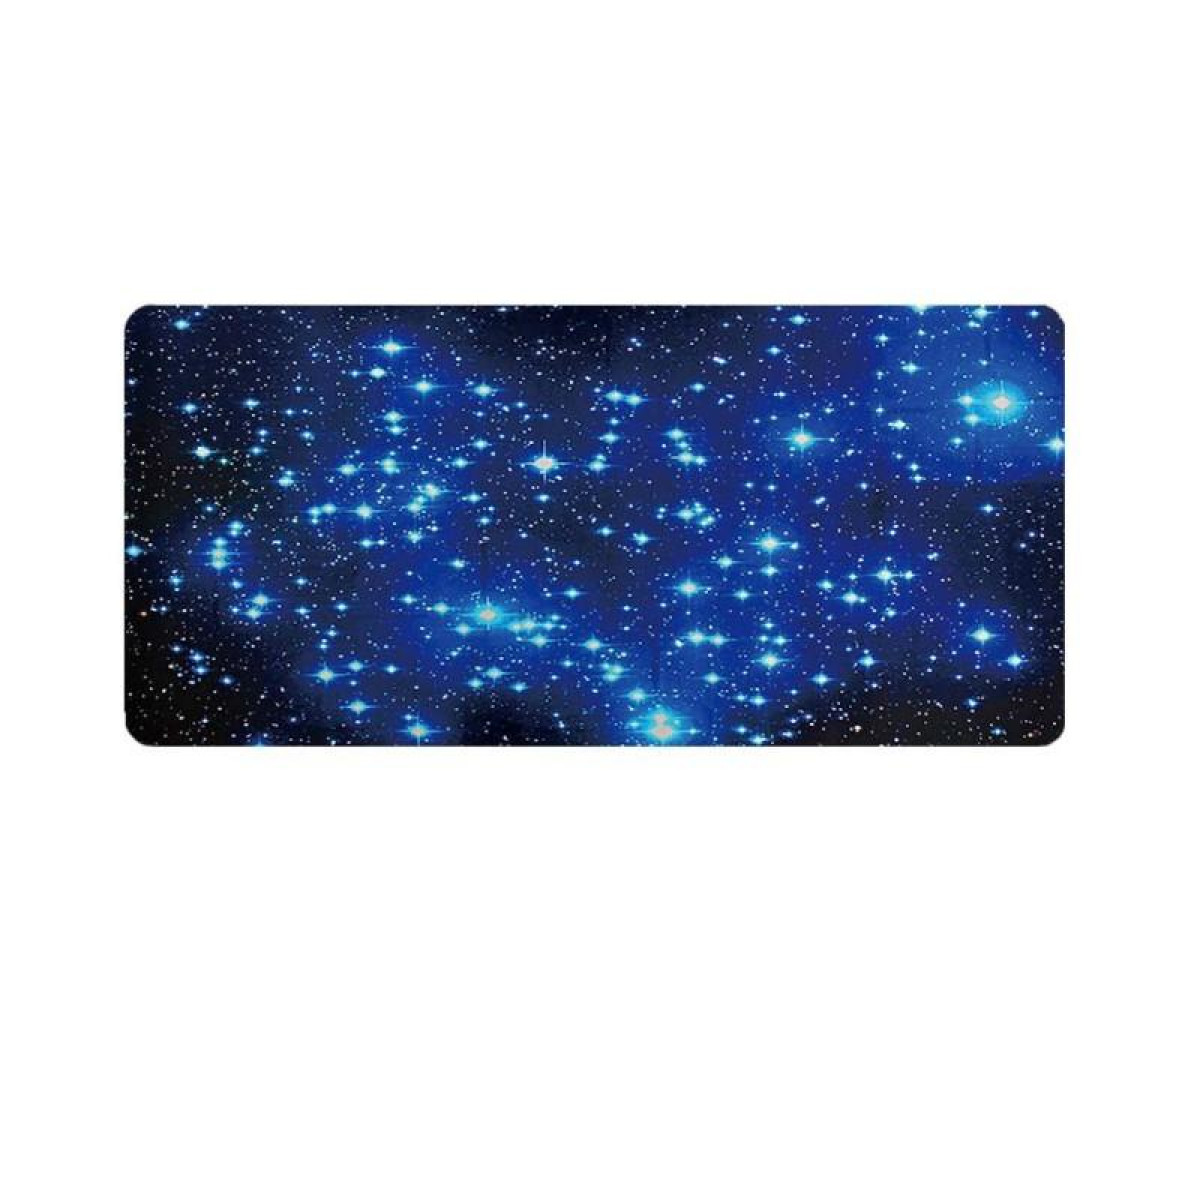 INF Großes x mit cm Sternenhimmelmuster cm) cm 80 Mauspad (0,2 30x80 Schwarz/Blau Mauspad